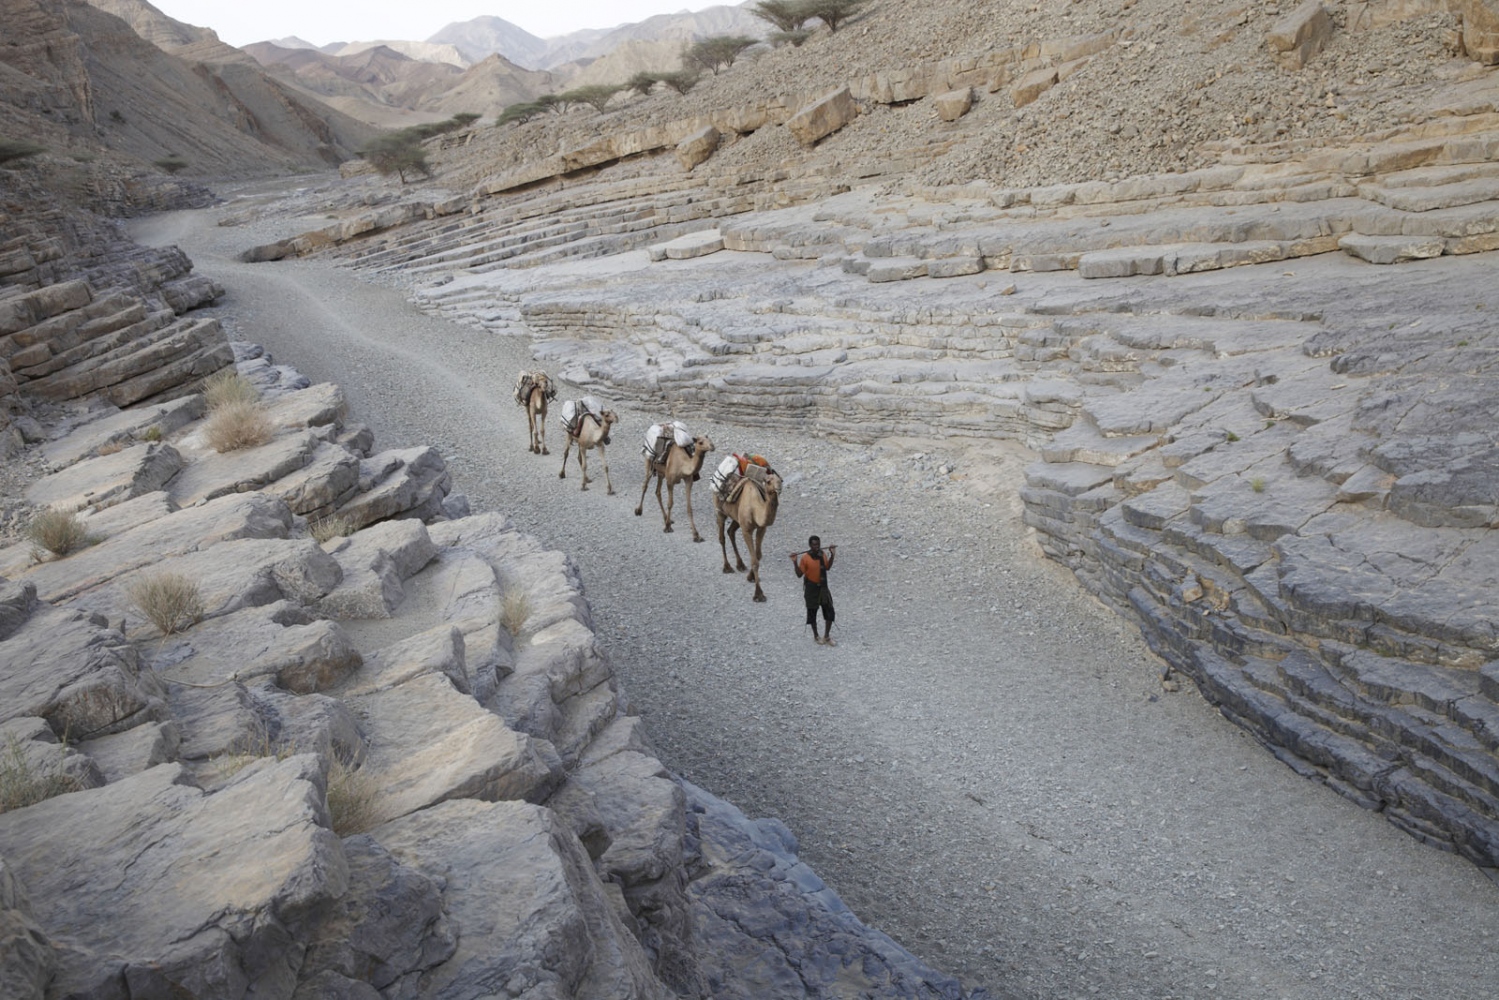 SALT - Salt traders walk their camels along the ancient salt...